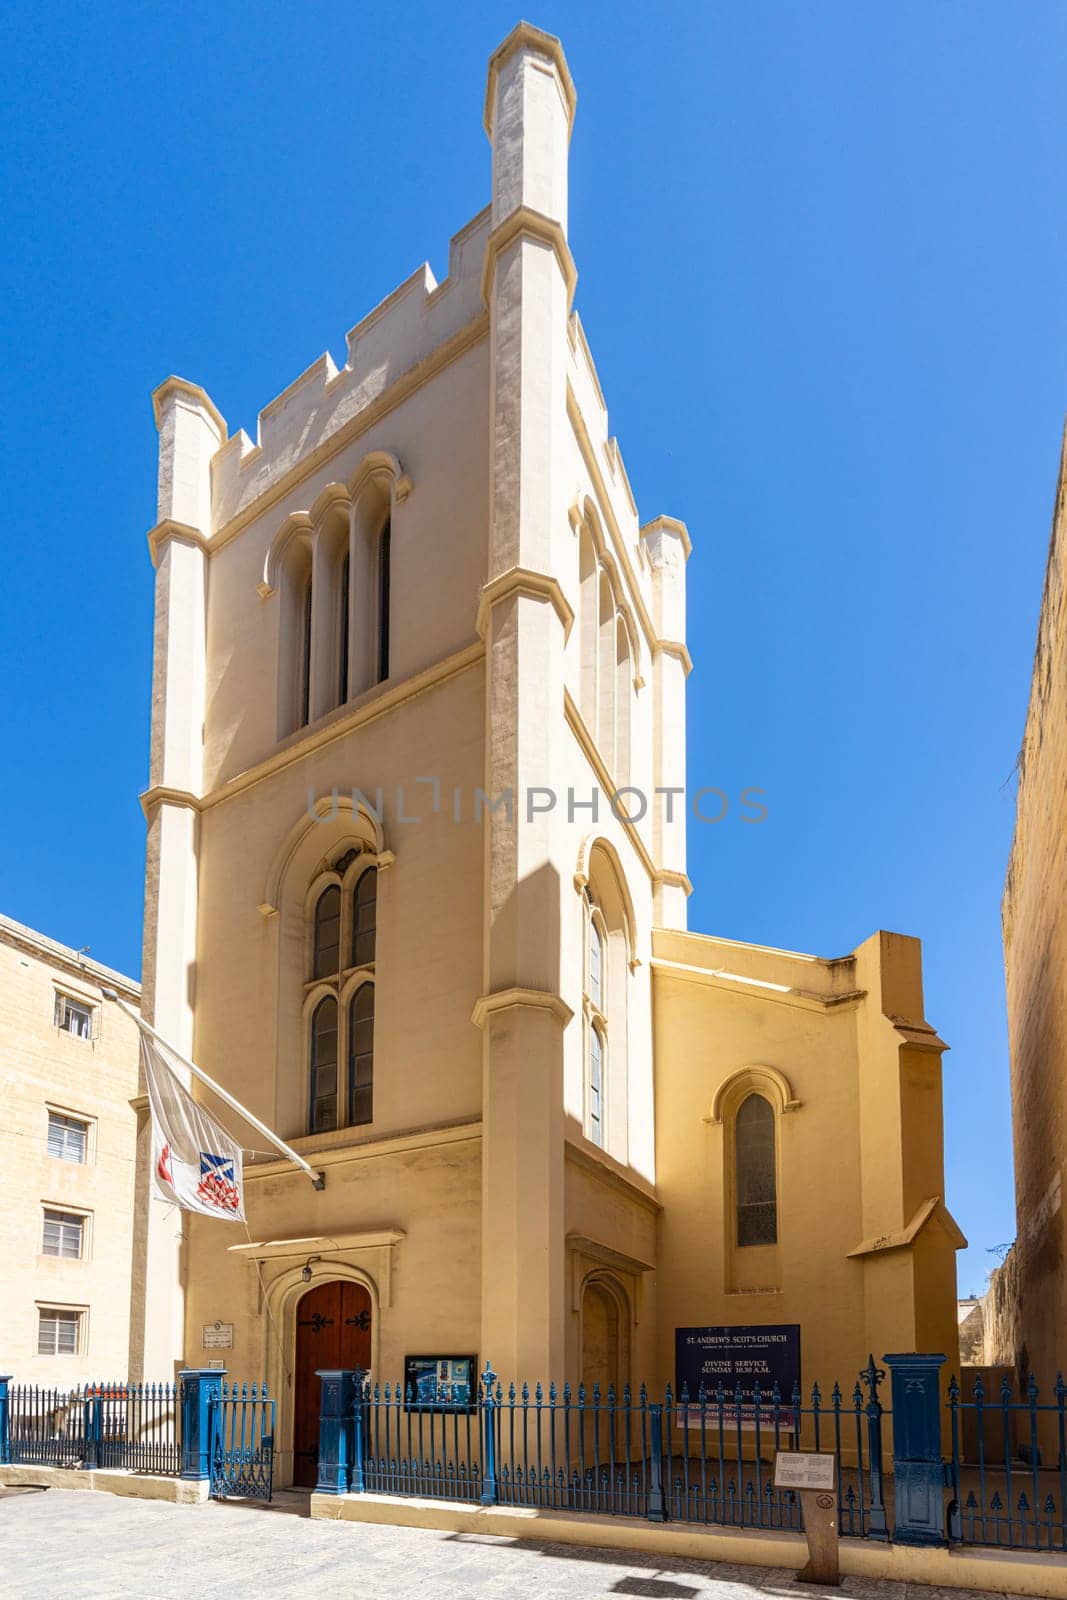 St.Andrew's Scot's church in Valletta, Malta by sergiodv